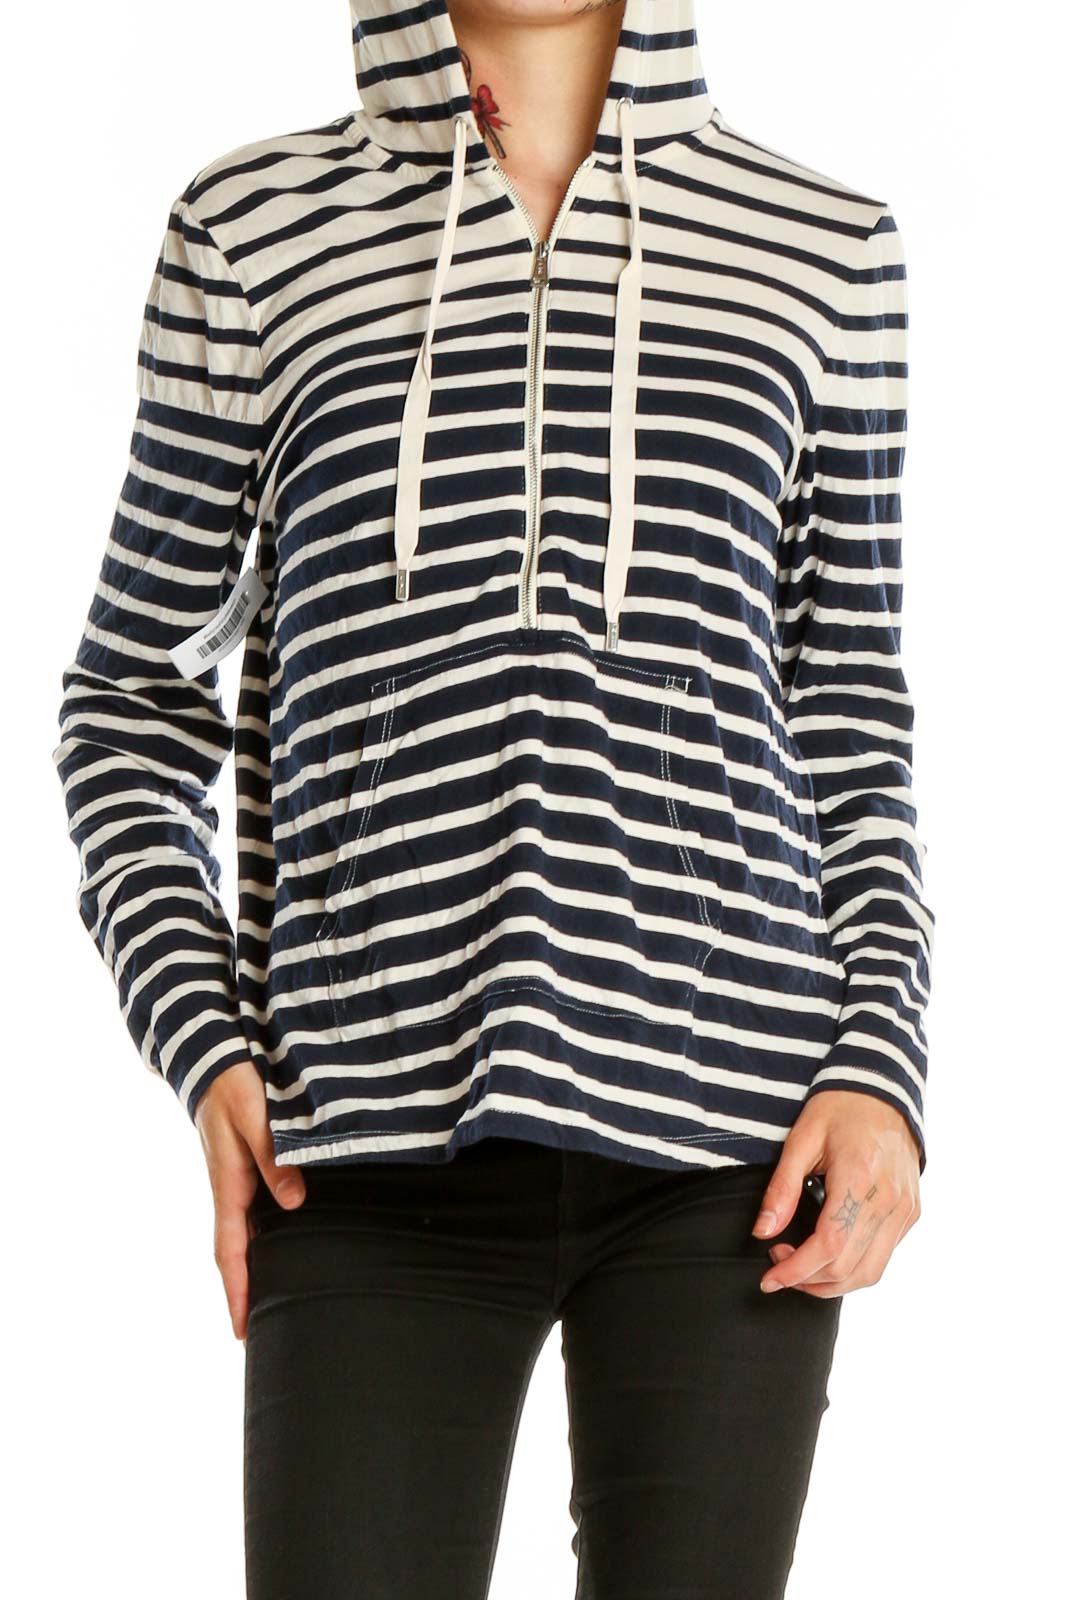 Blue Cream Striped Sweatshirt Front